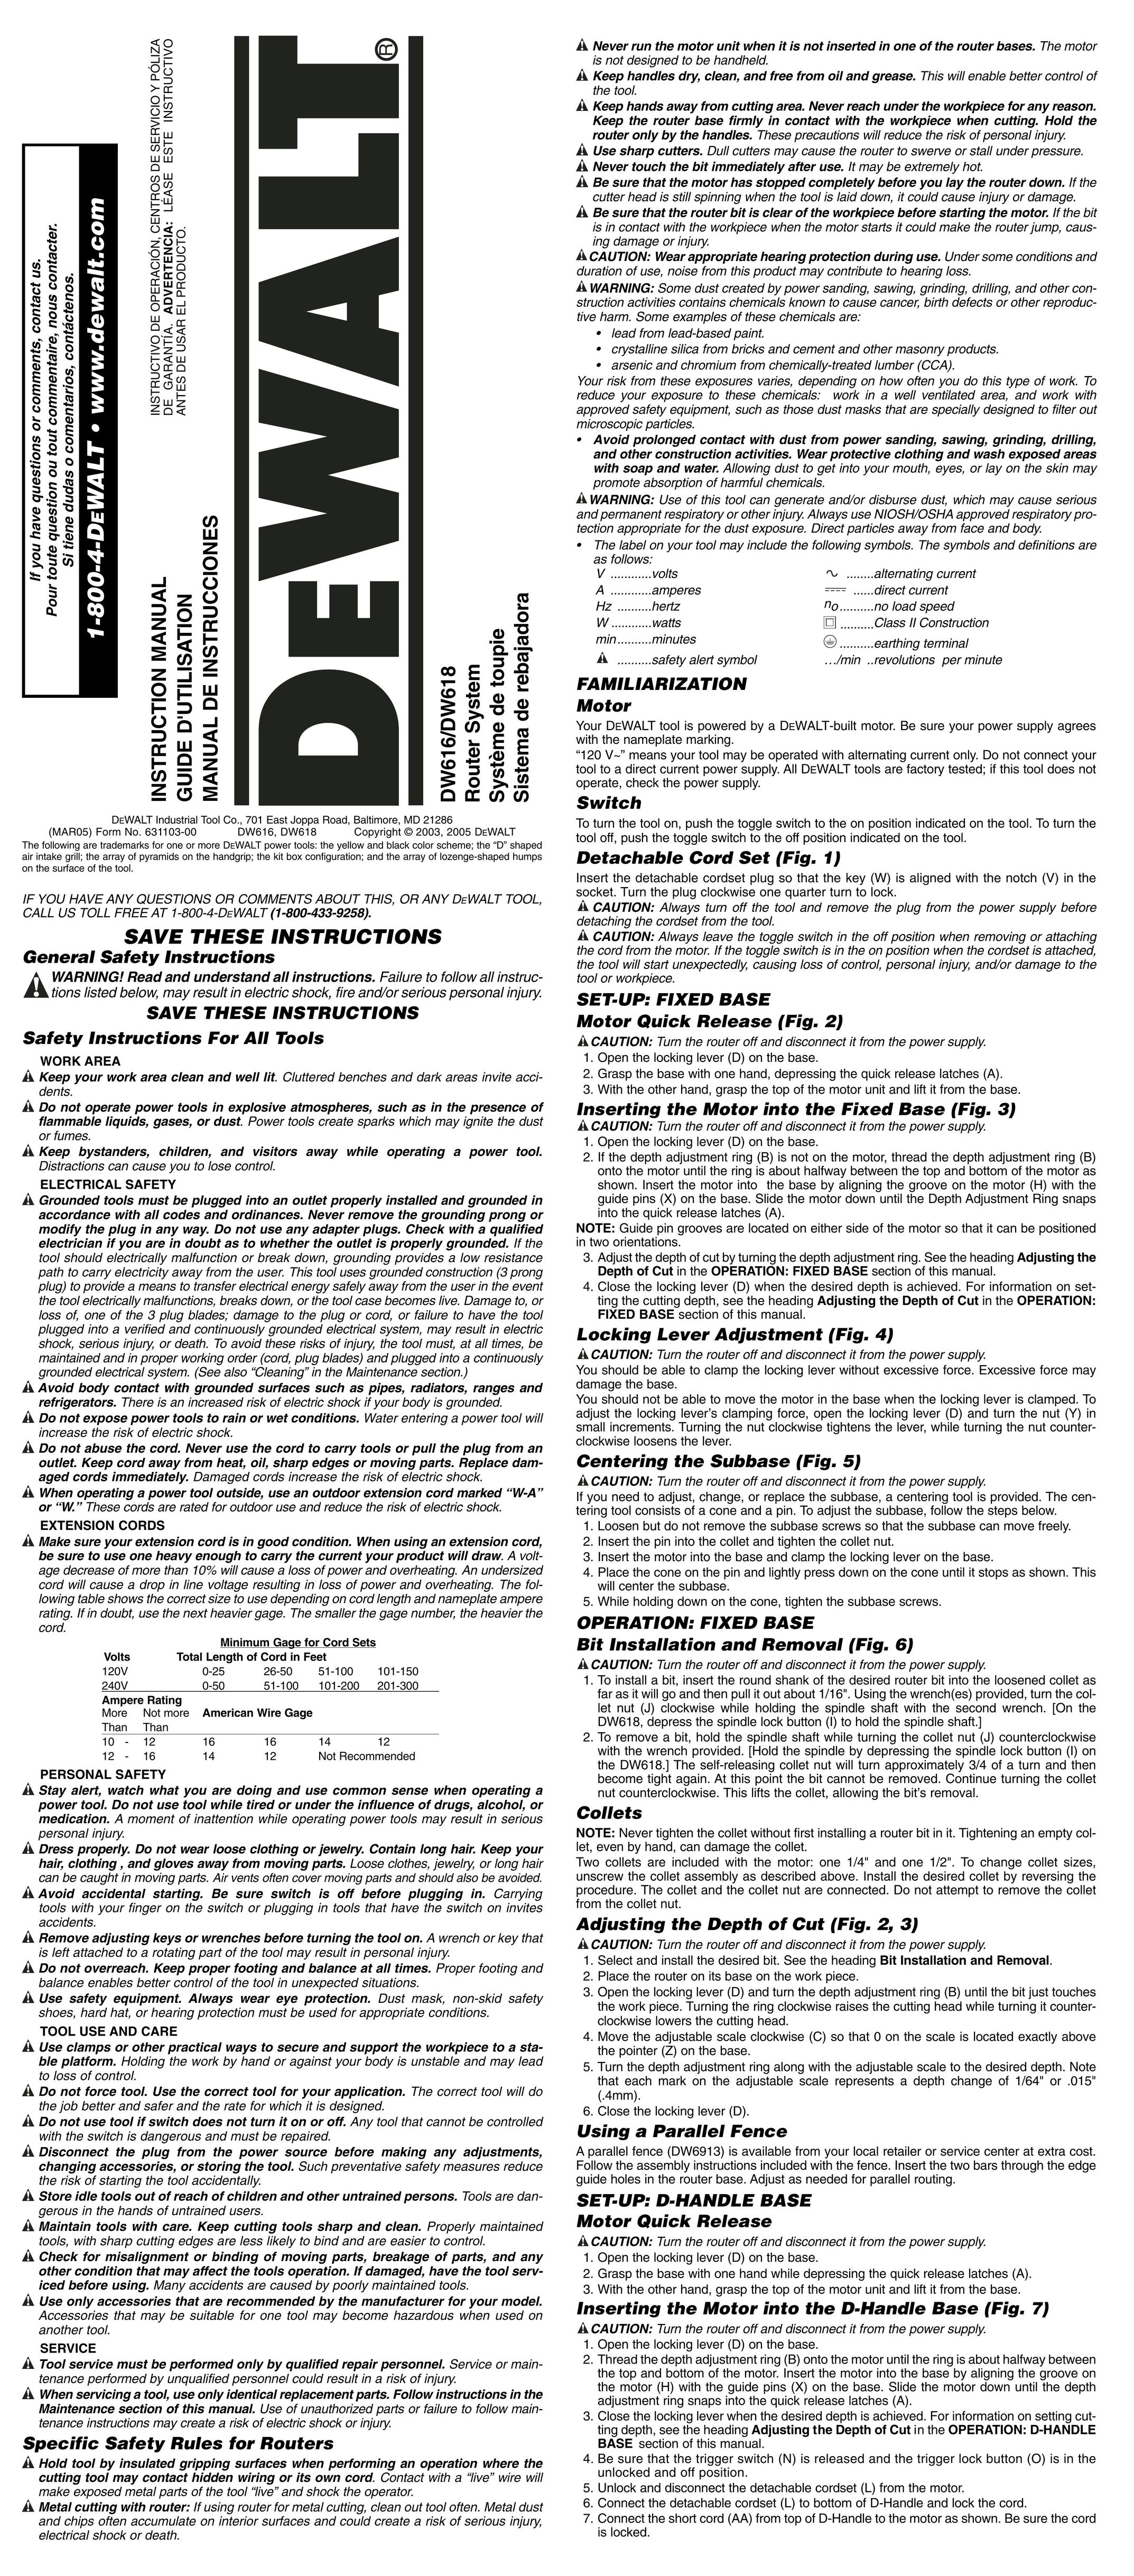 DeWalt DW618B3 Router User Manual